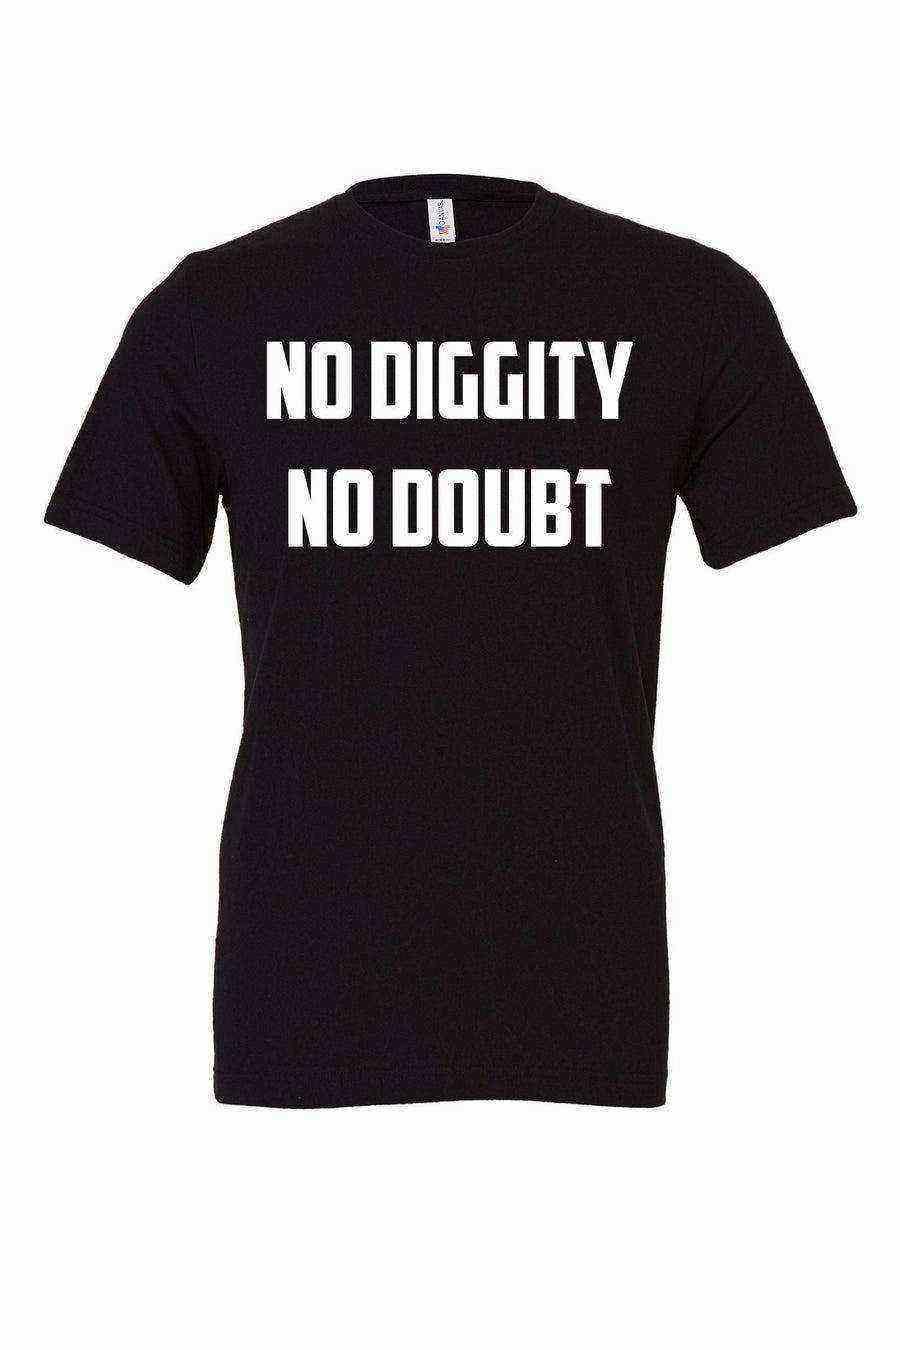 Womens | No Diggity No Doubt Shirt | 90s Music Shirt | Blackstreet Shirts - Dylan's Tees